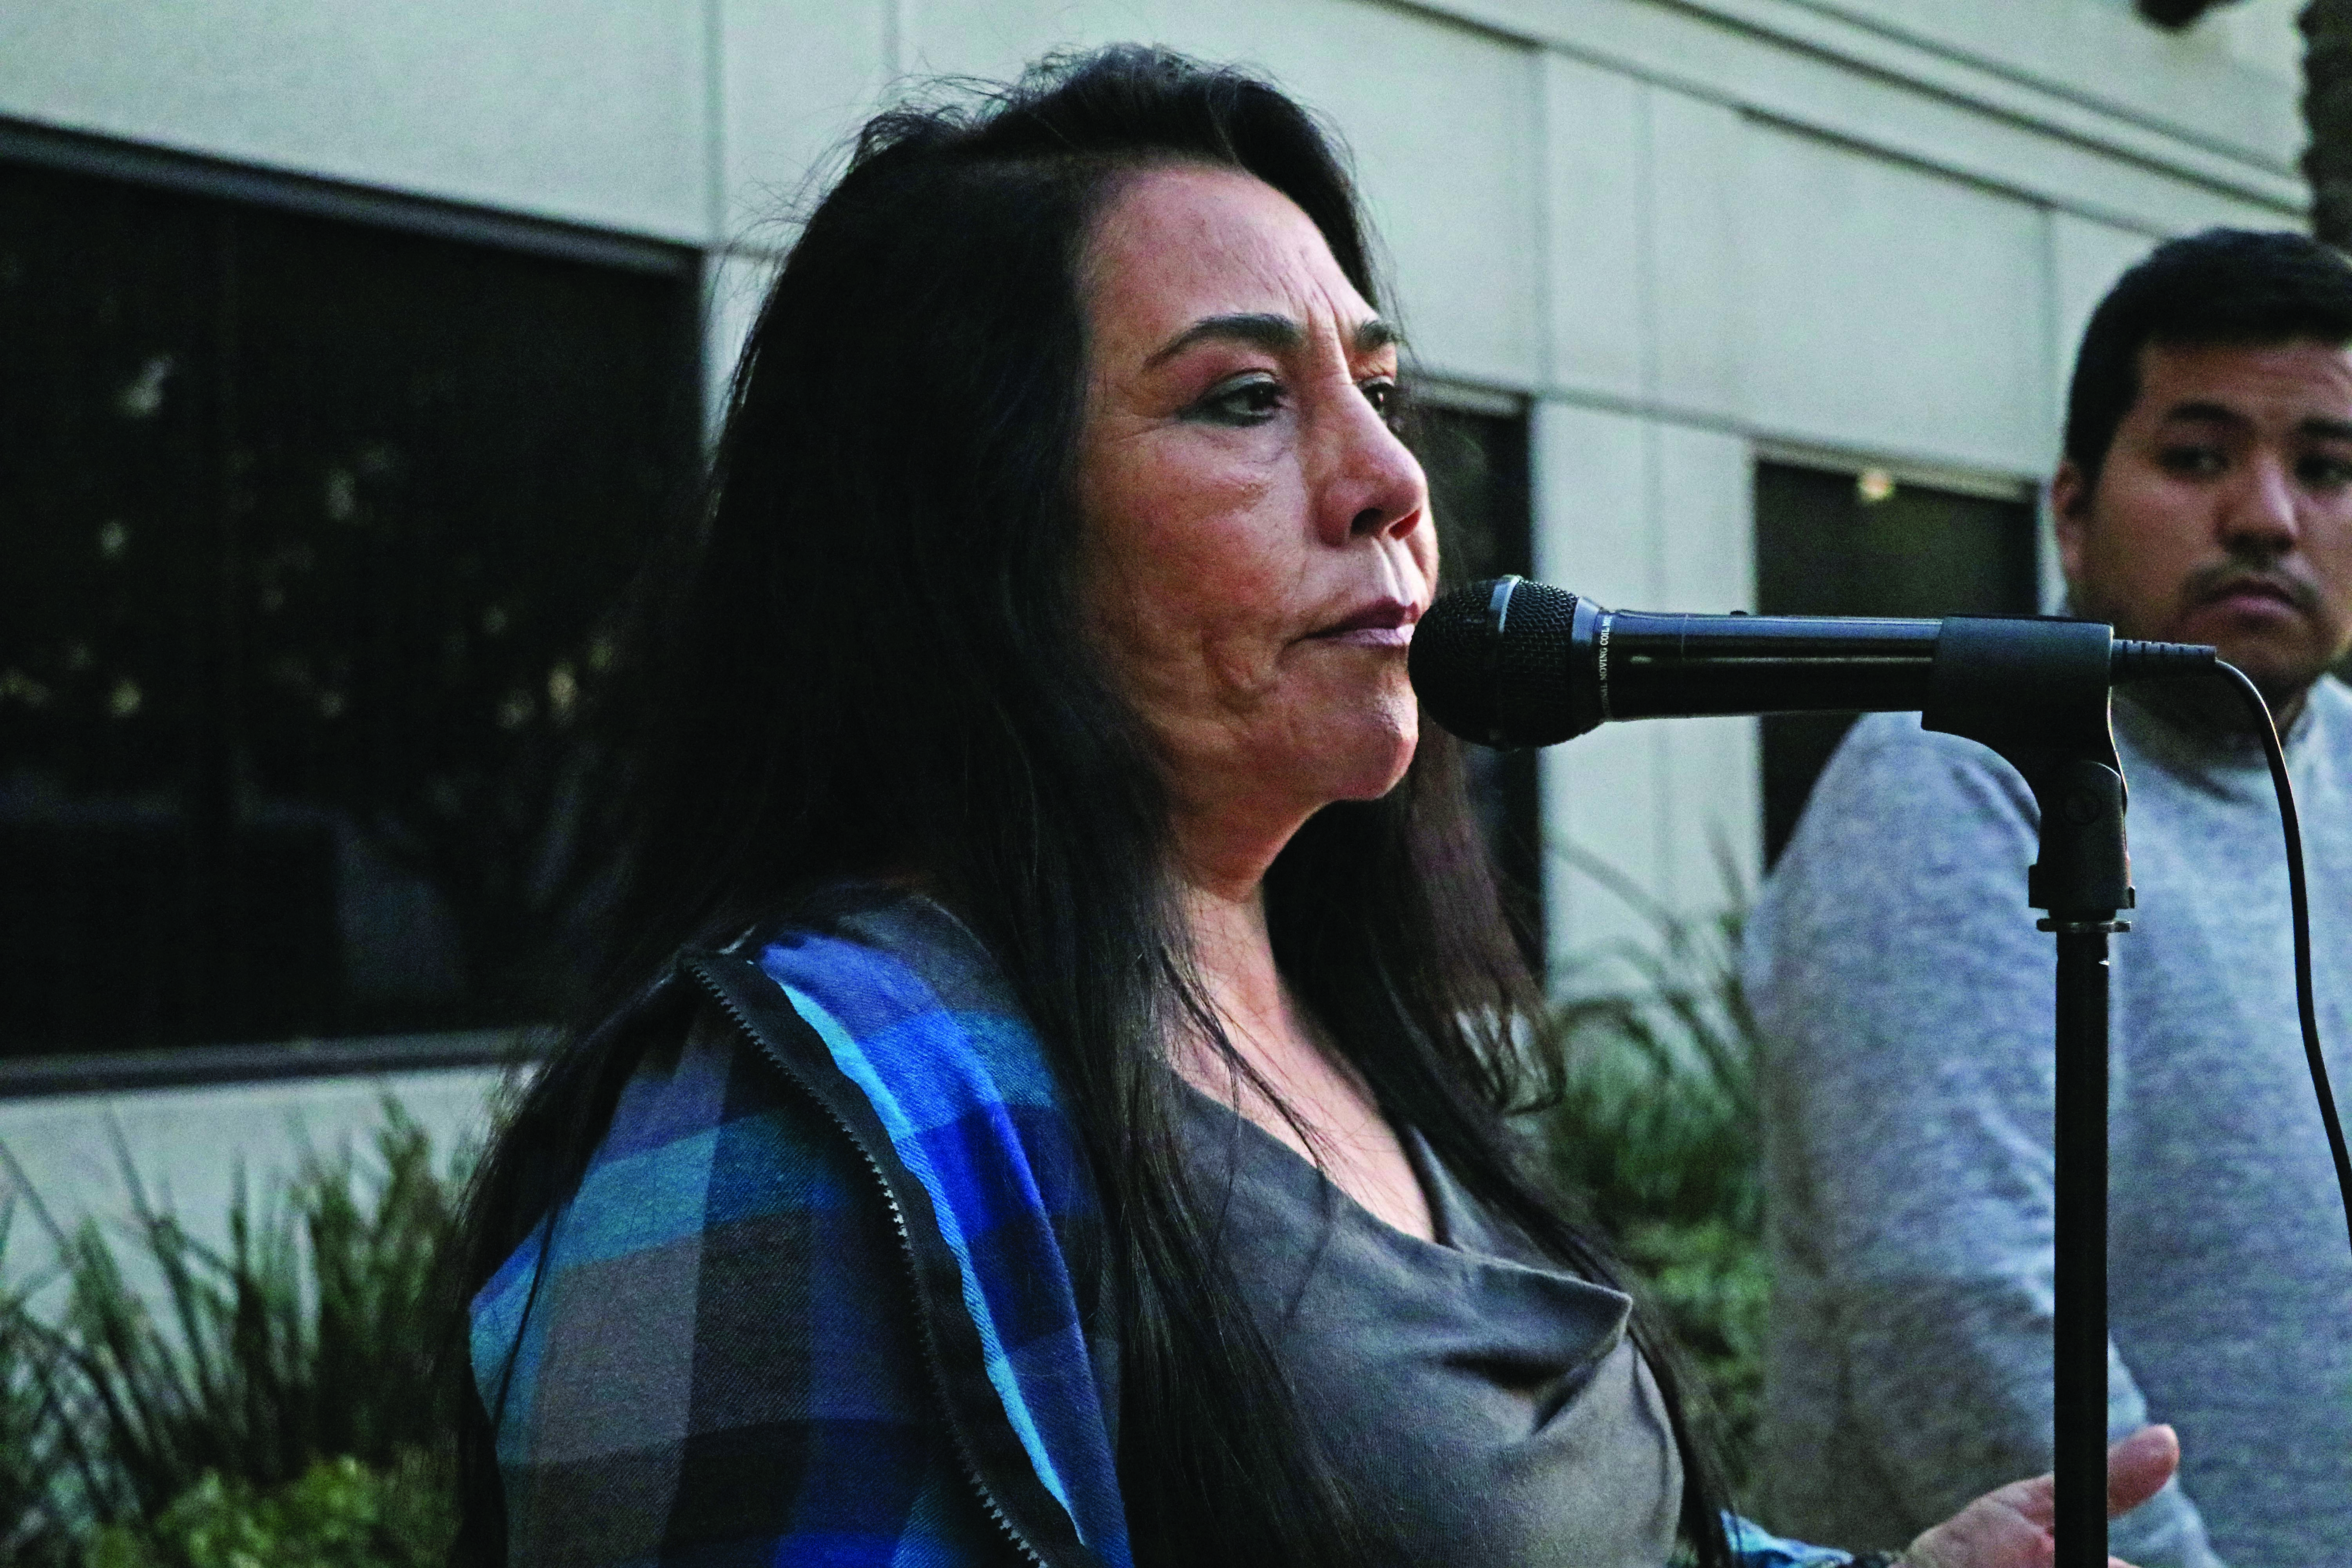 San Bernardino woman alleges wrongful detention